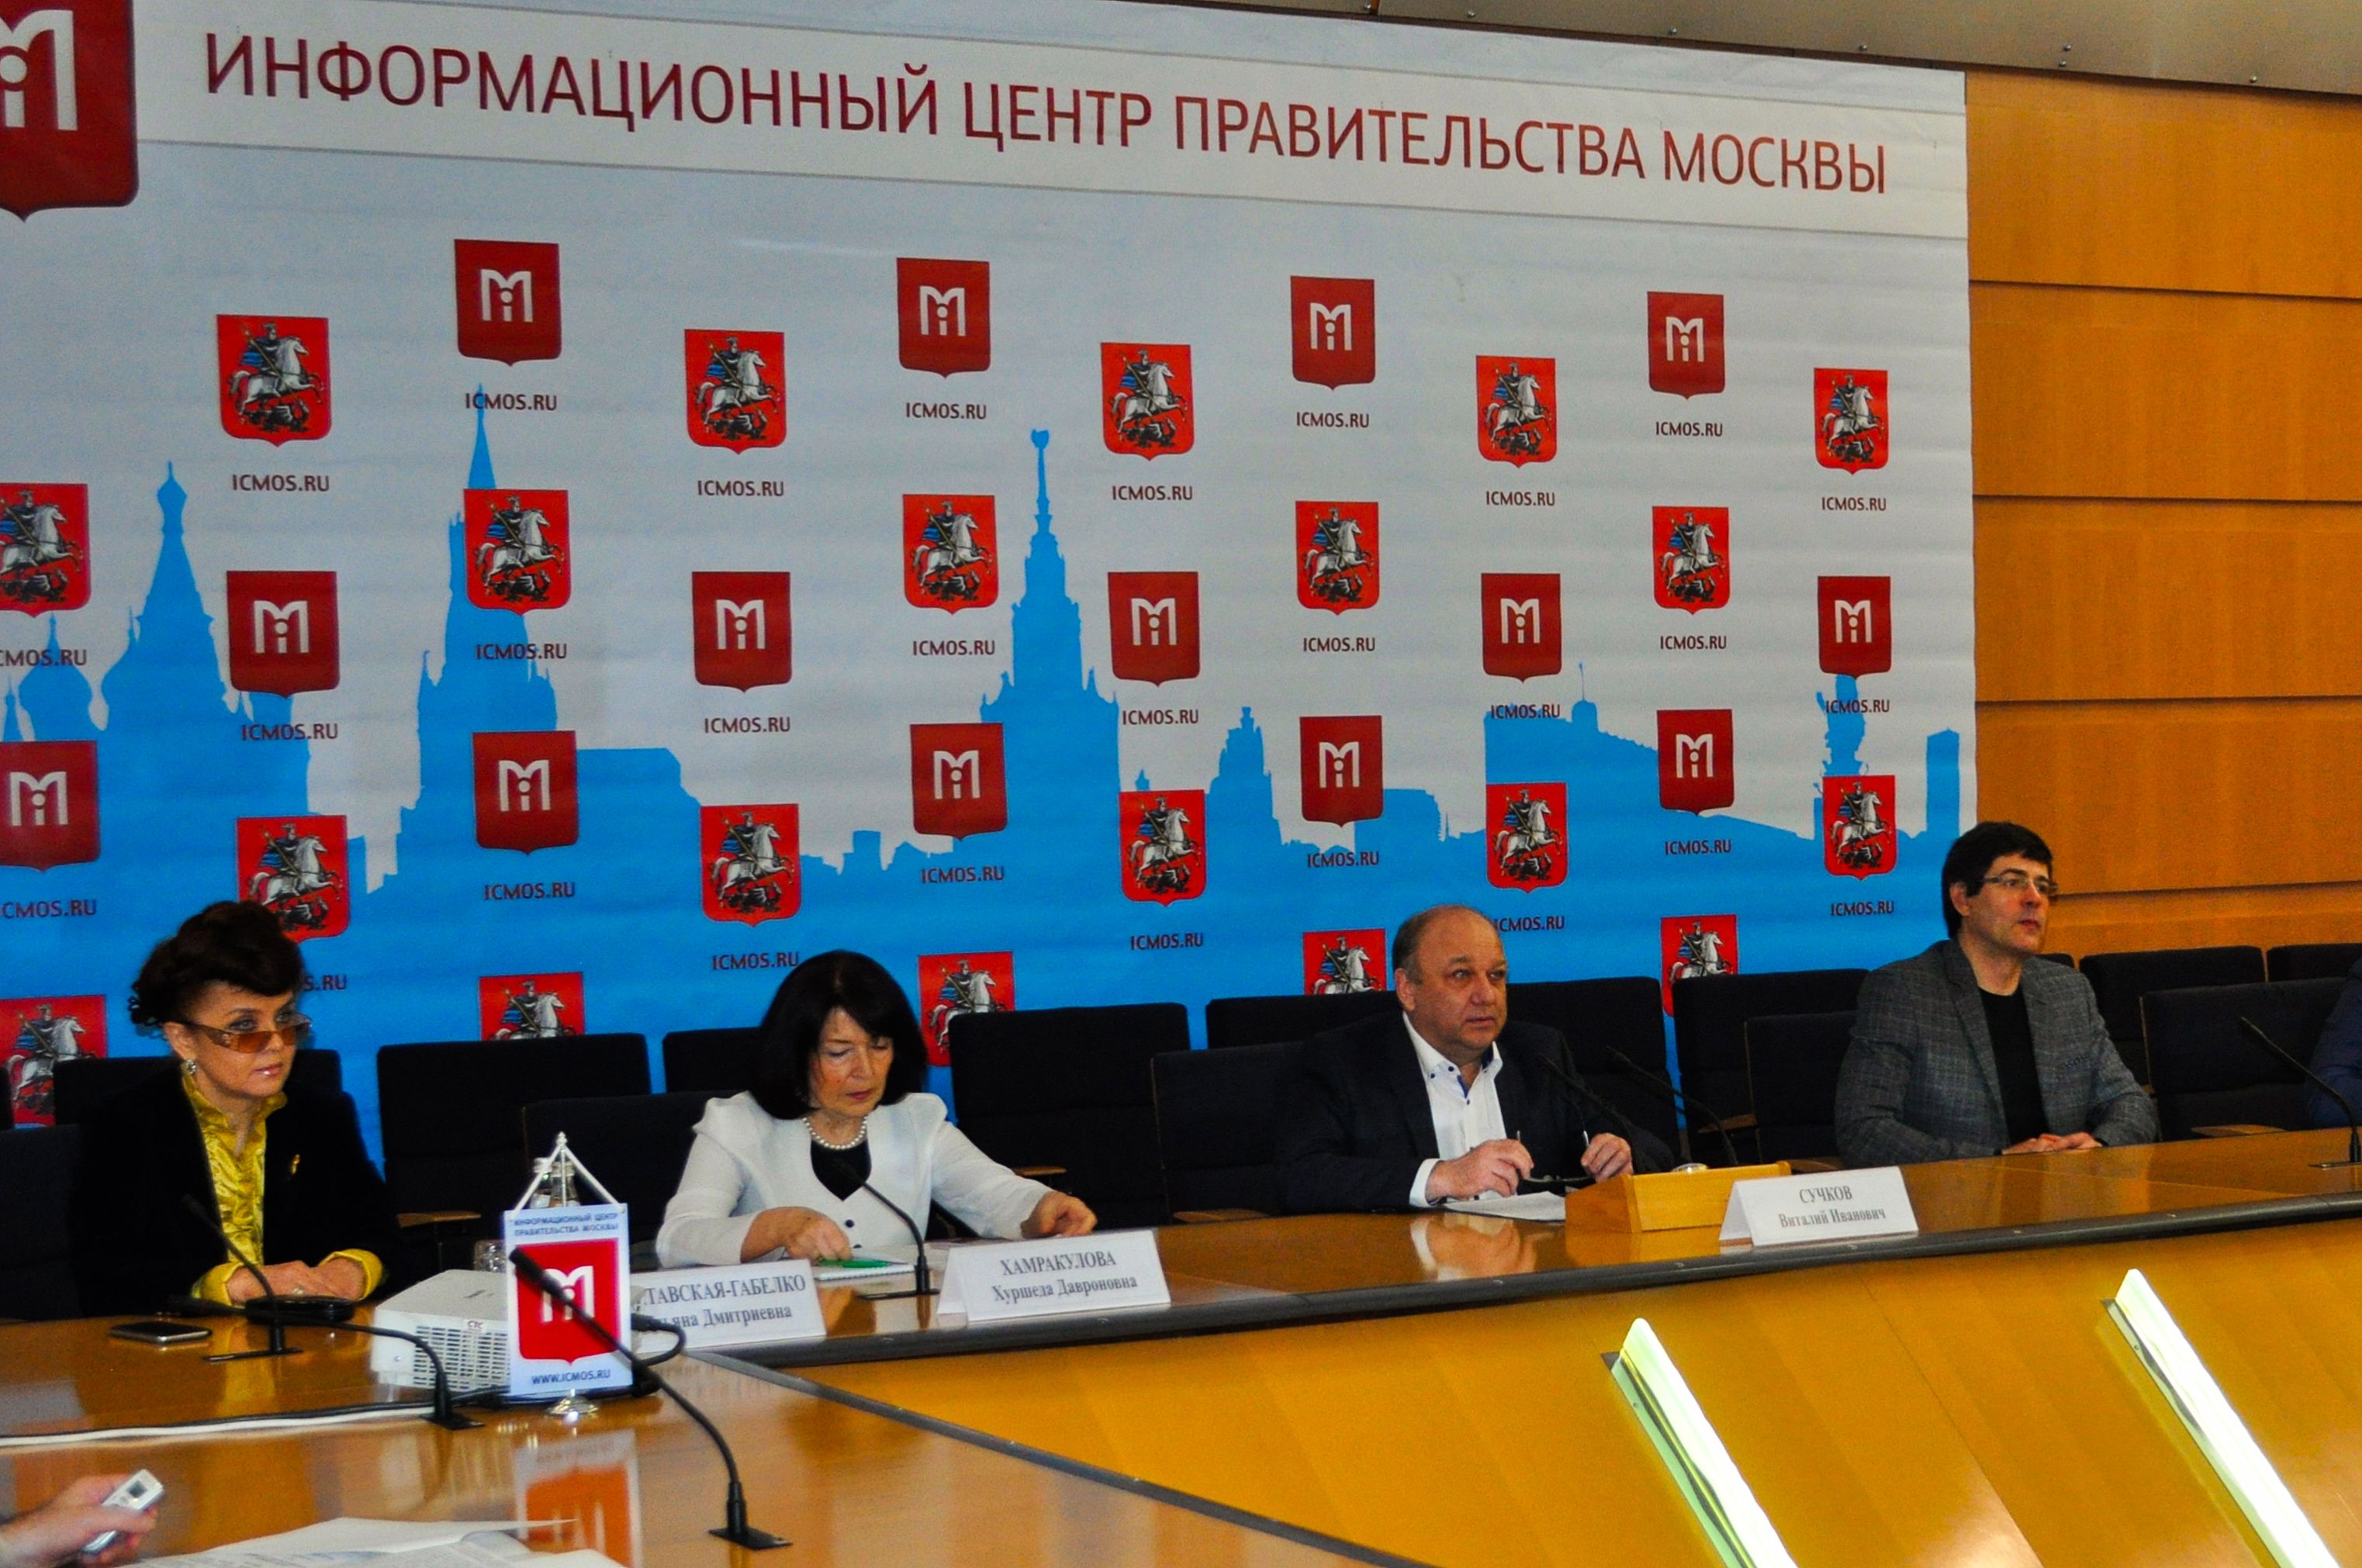 Празднование Навруза обсудили на пресс-конференции в Москве. Фото: Никита Нестеров